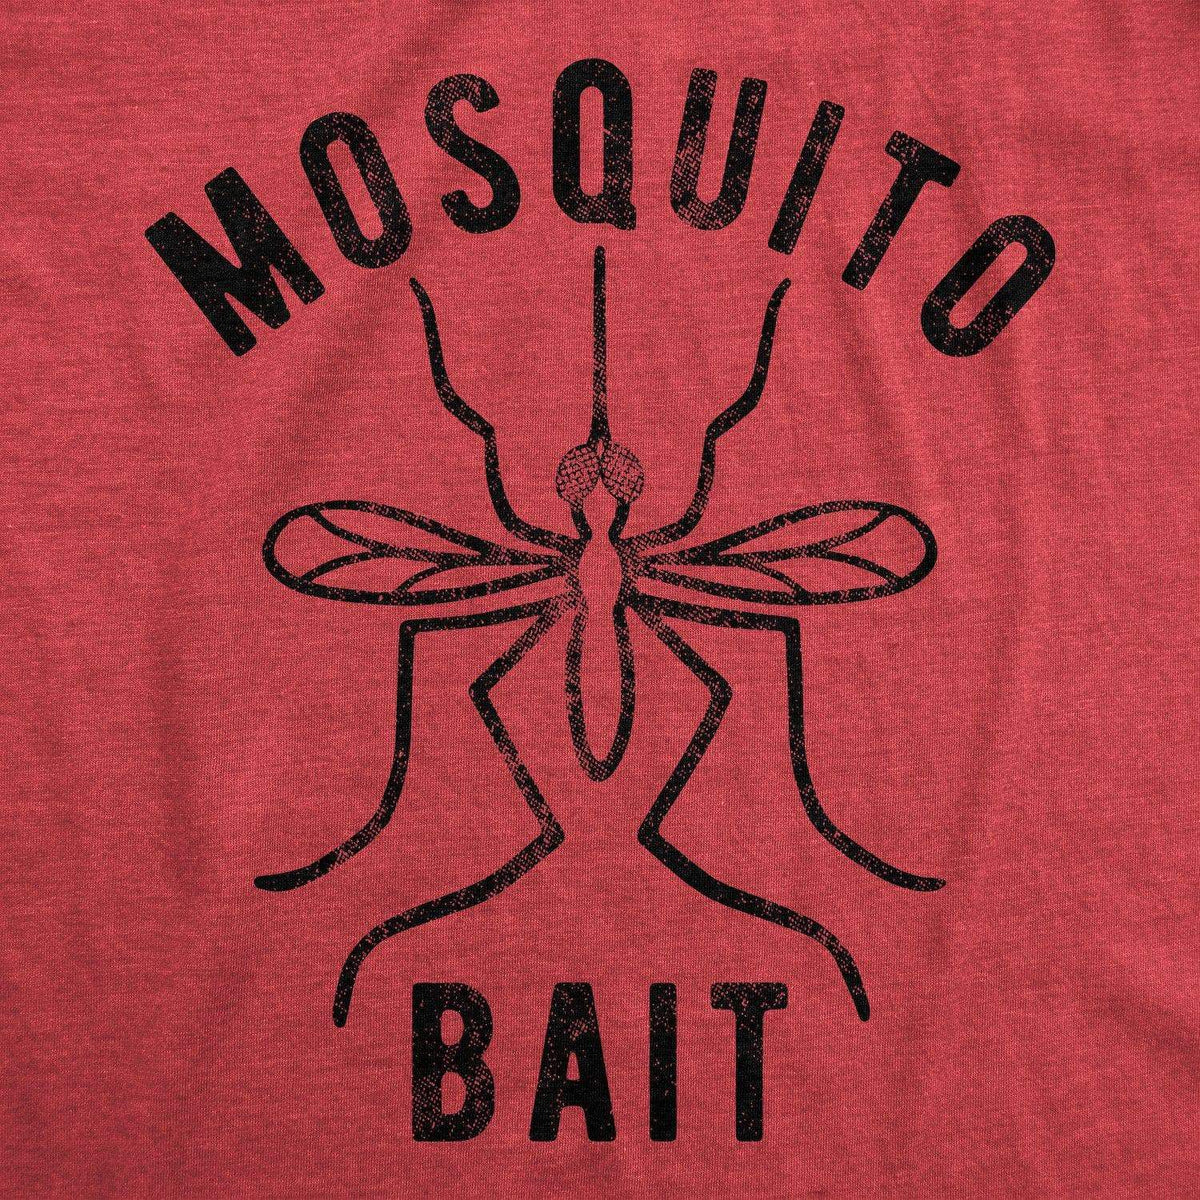 Mosquito Bait Men&#39;s Tshirt - Crazy Dog T-Shirts